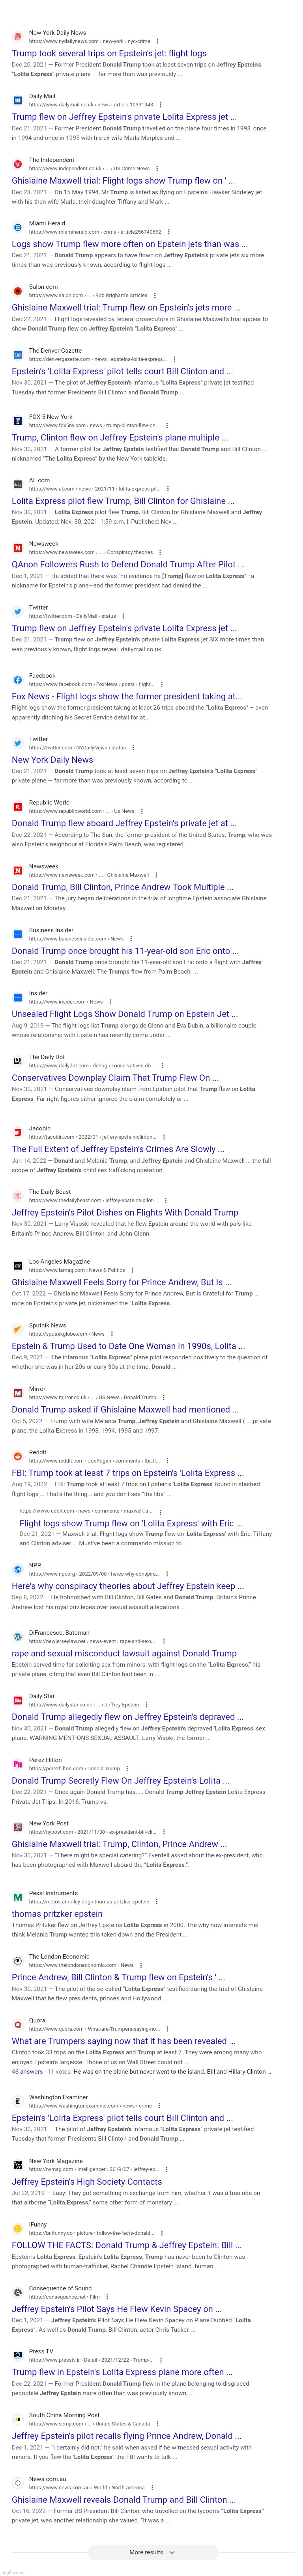 Donald Trump on Jeffrey Epstein's Lolita Express | image tagged in donald trump,trump,jeffrey epstein,lolita express,trump epstein,trump articles | made w/ Imgflip meme maker